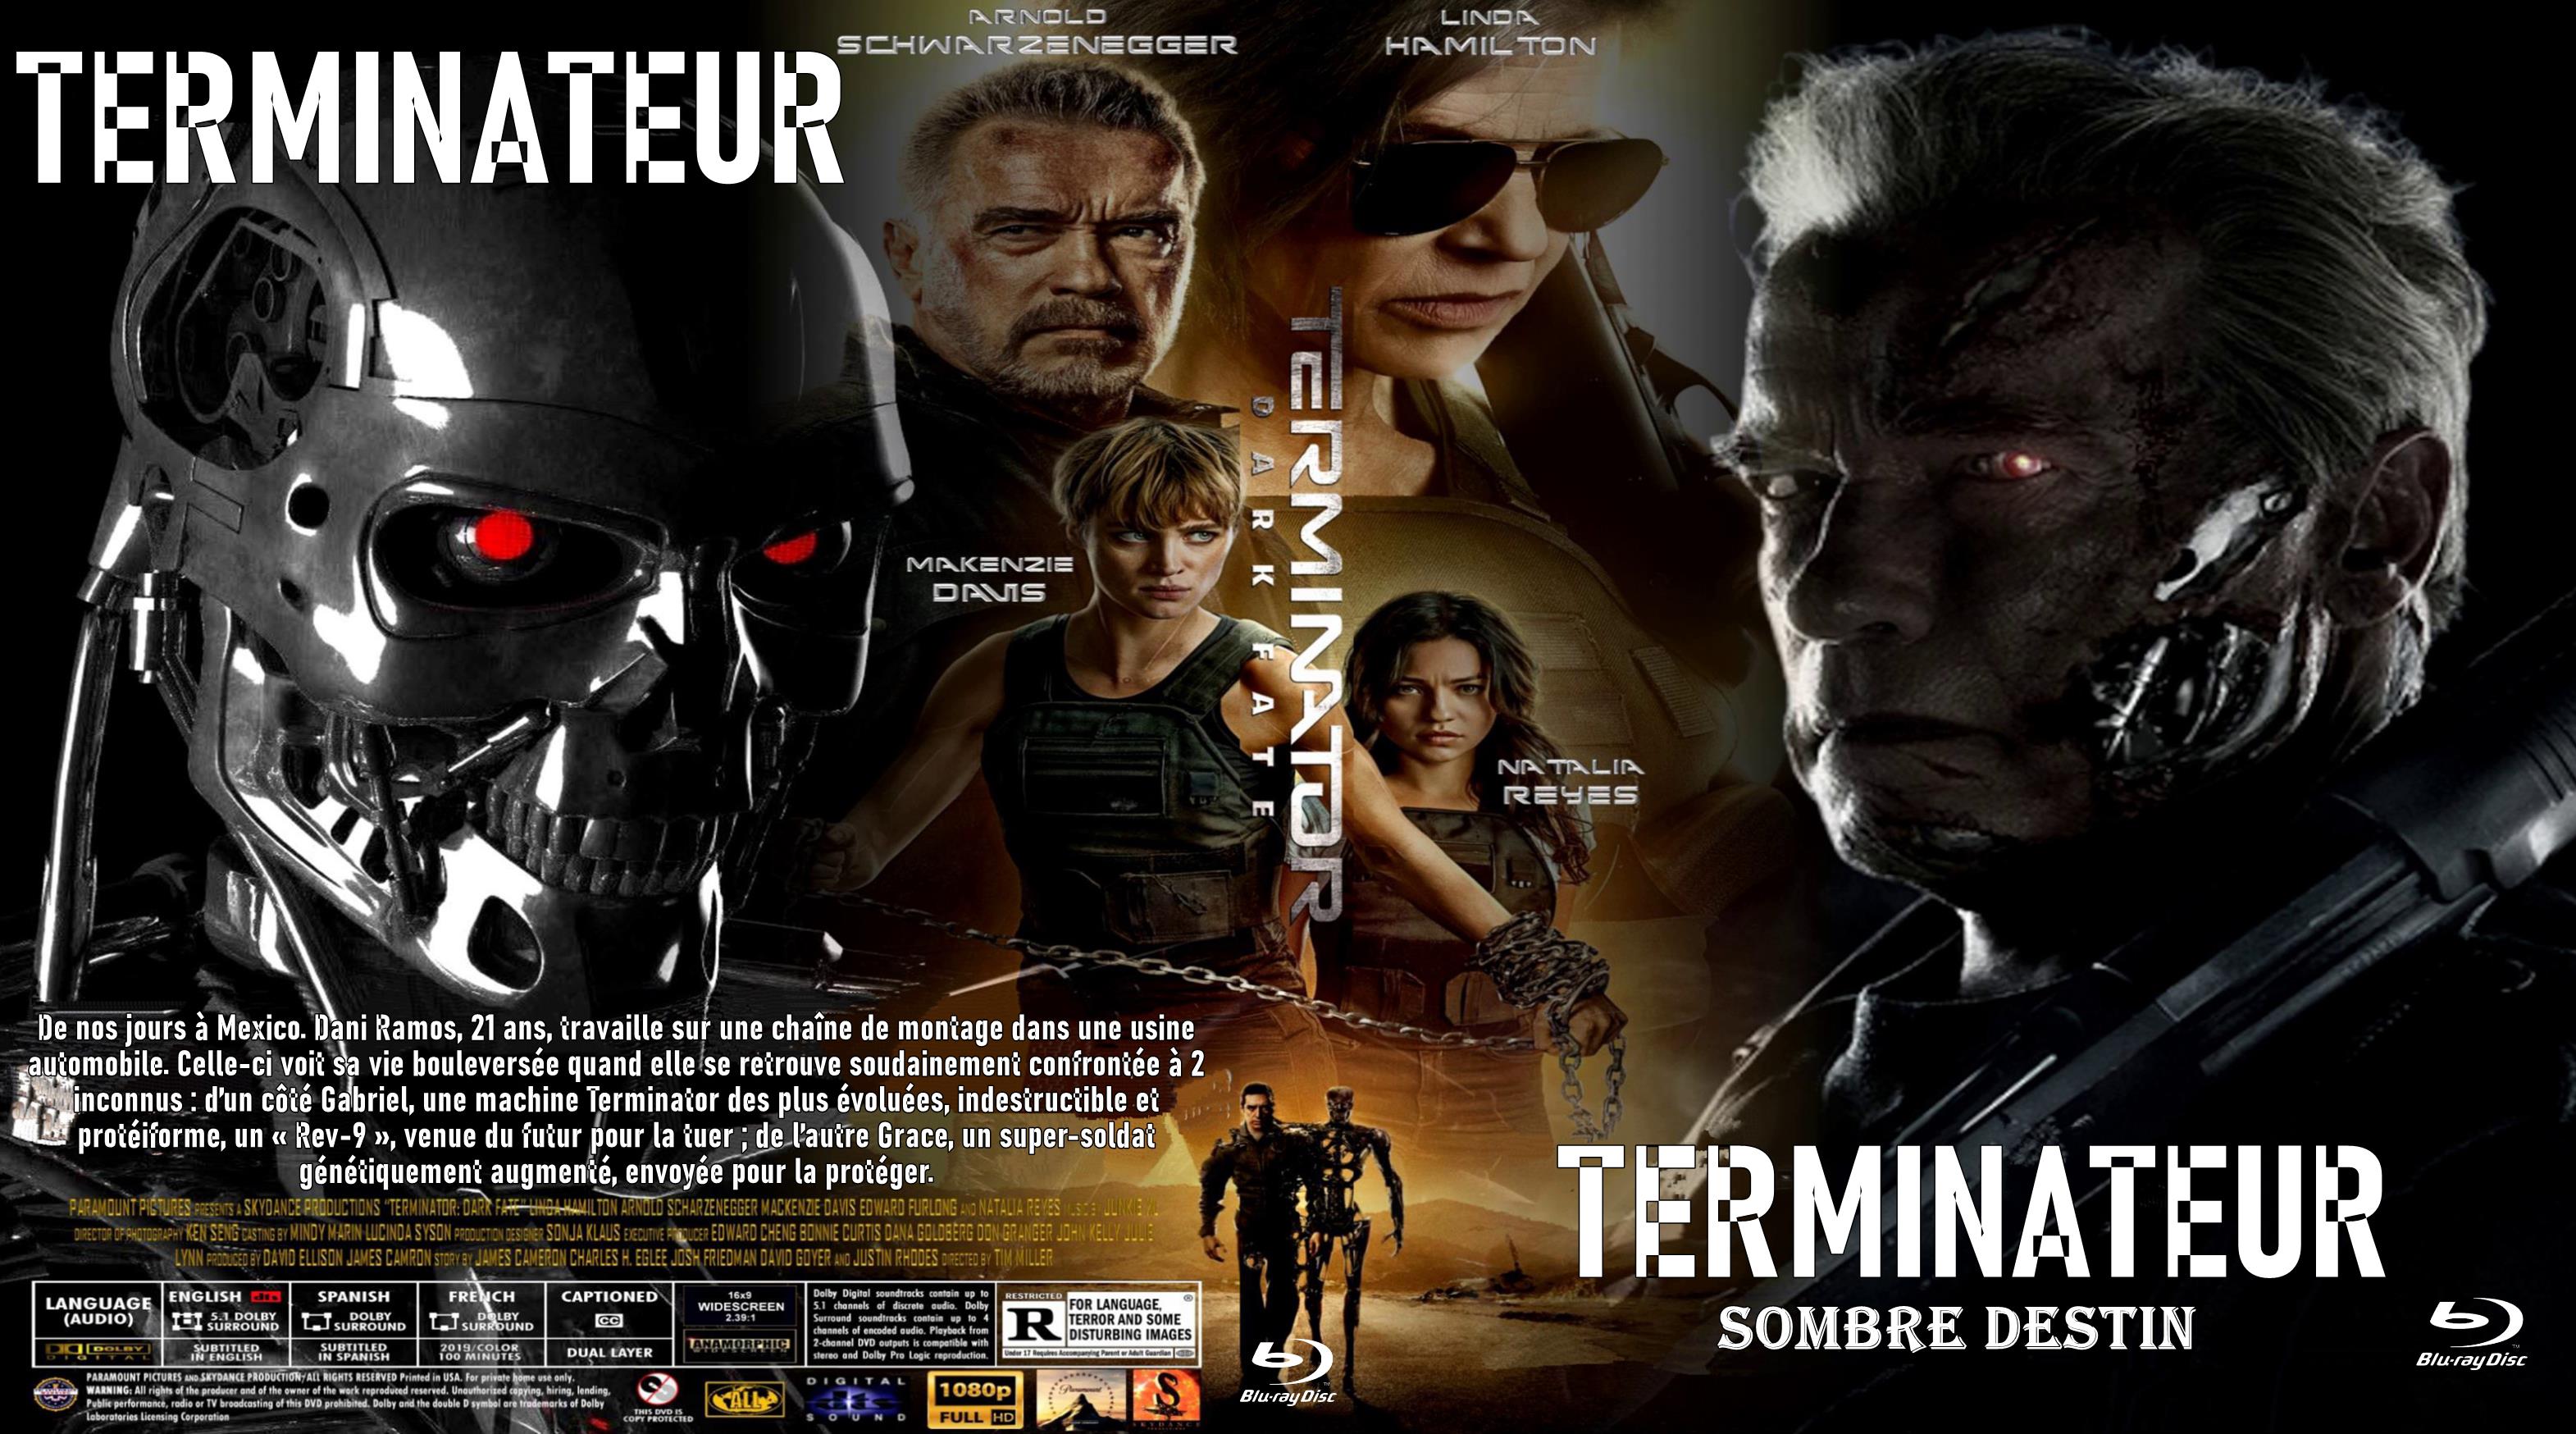 Jaquette DVD Terminateur sombre destin custom (BLU-RAY)